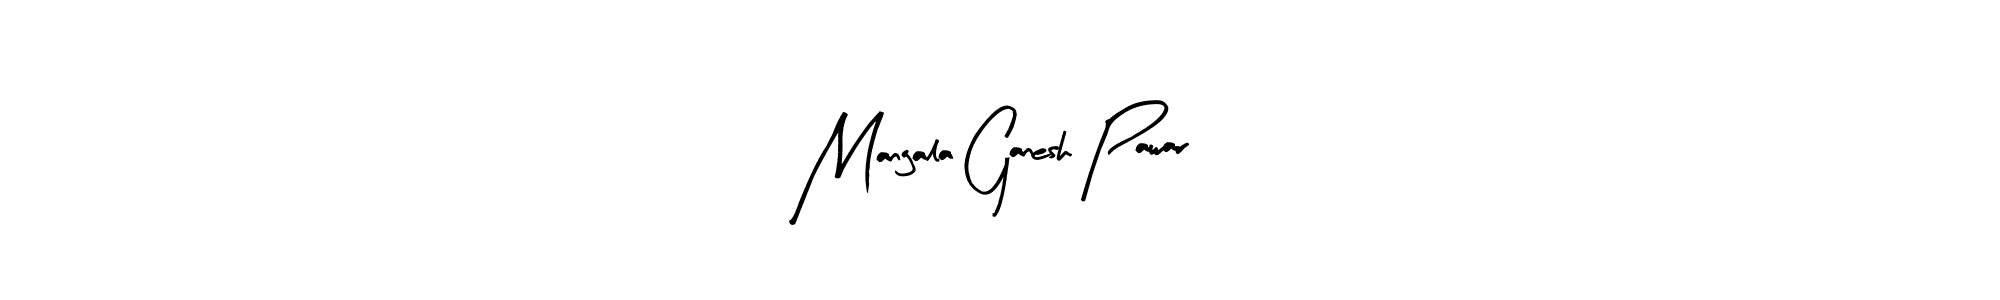 How to Draw Mangala Ganesh Pawar signature style? Arty Signature is a latest design signature styles for name Mangala Ganesh Pawar. Mangala Ganesh Pawar signature style 8 images and pictures png